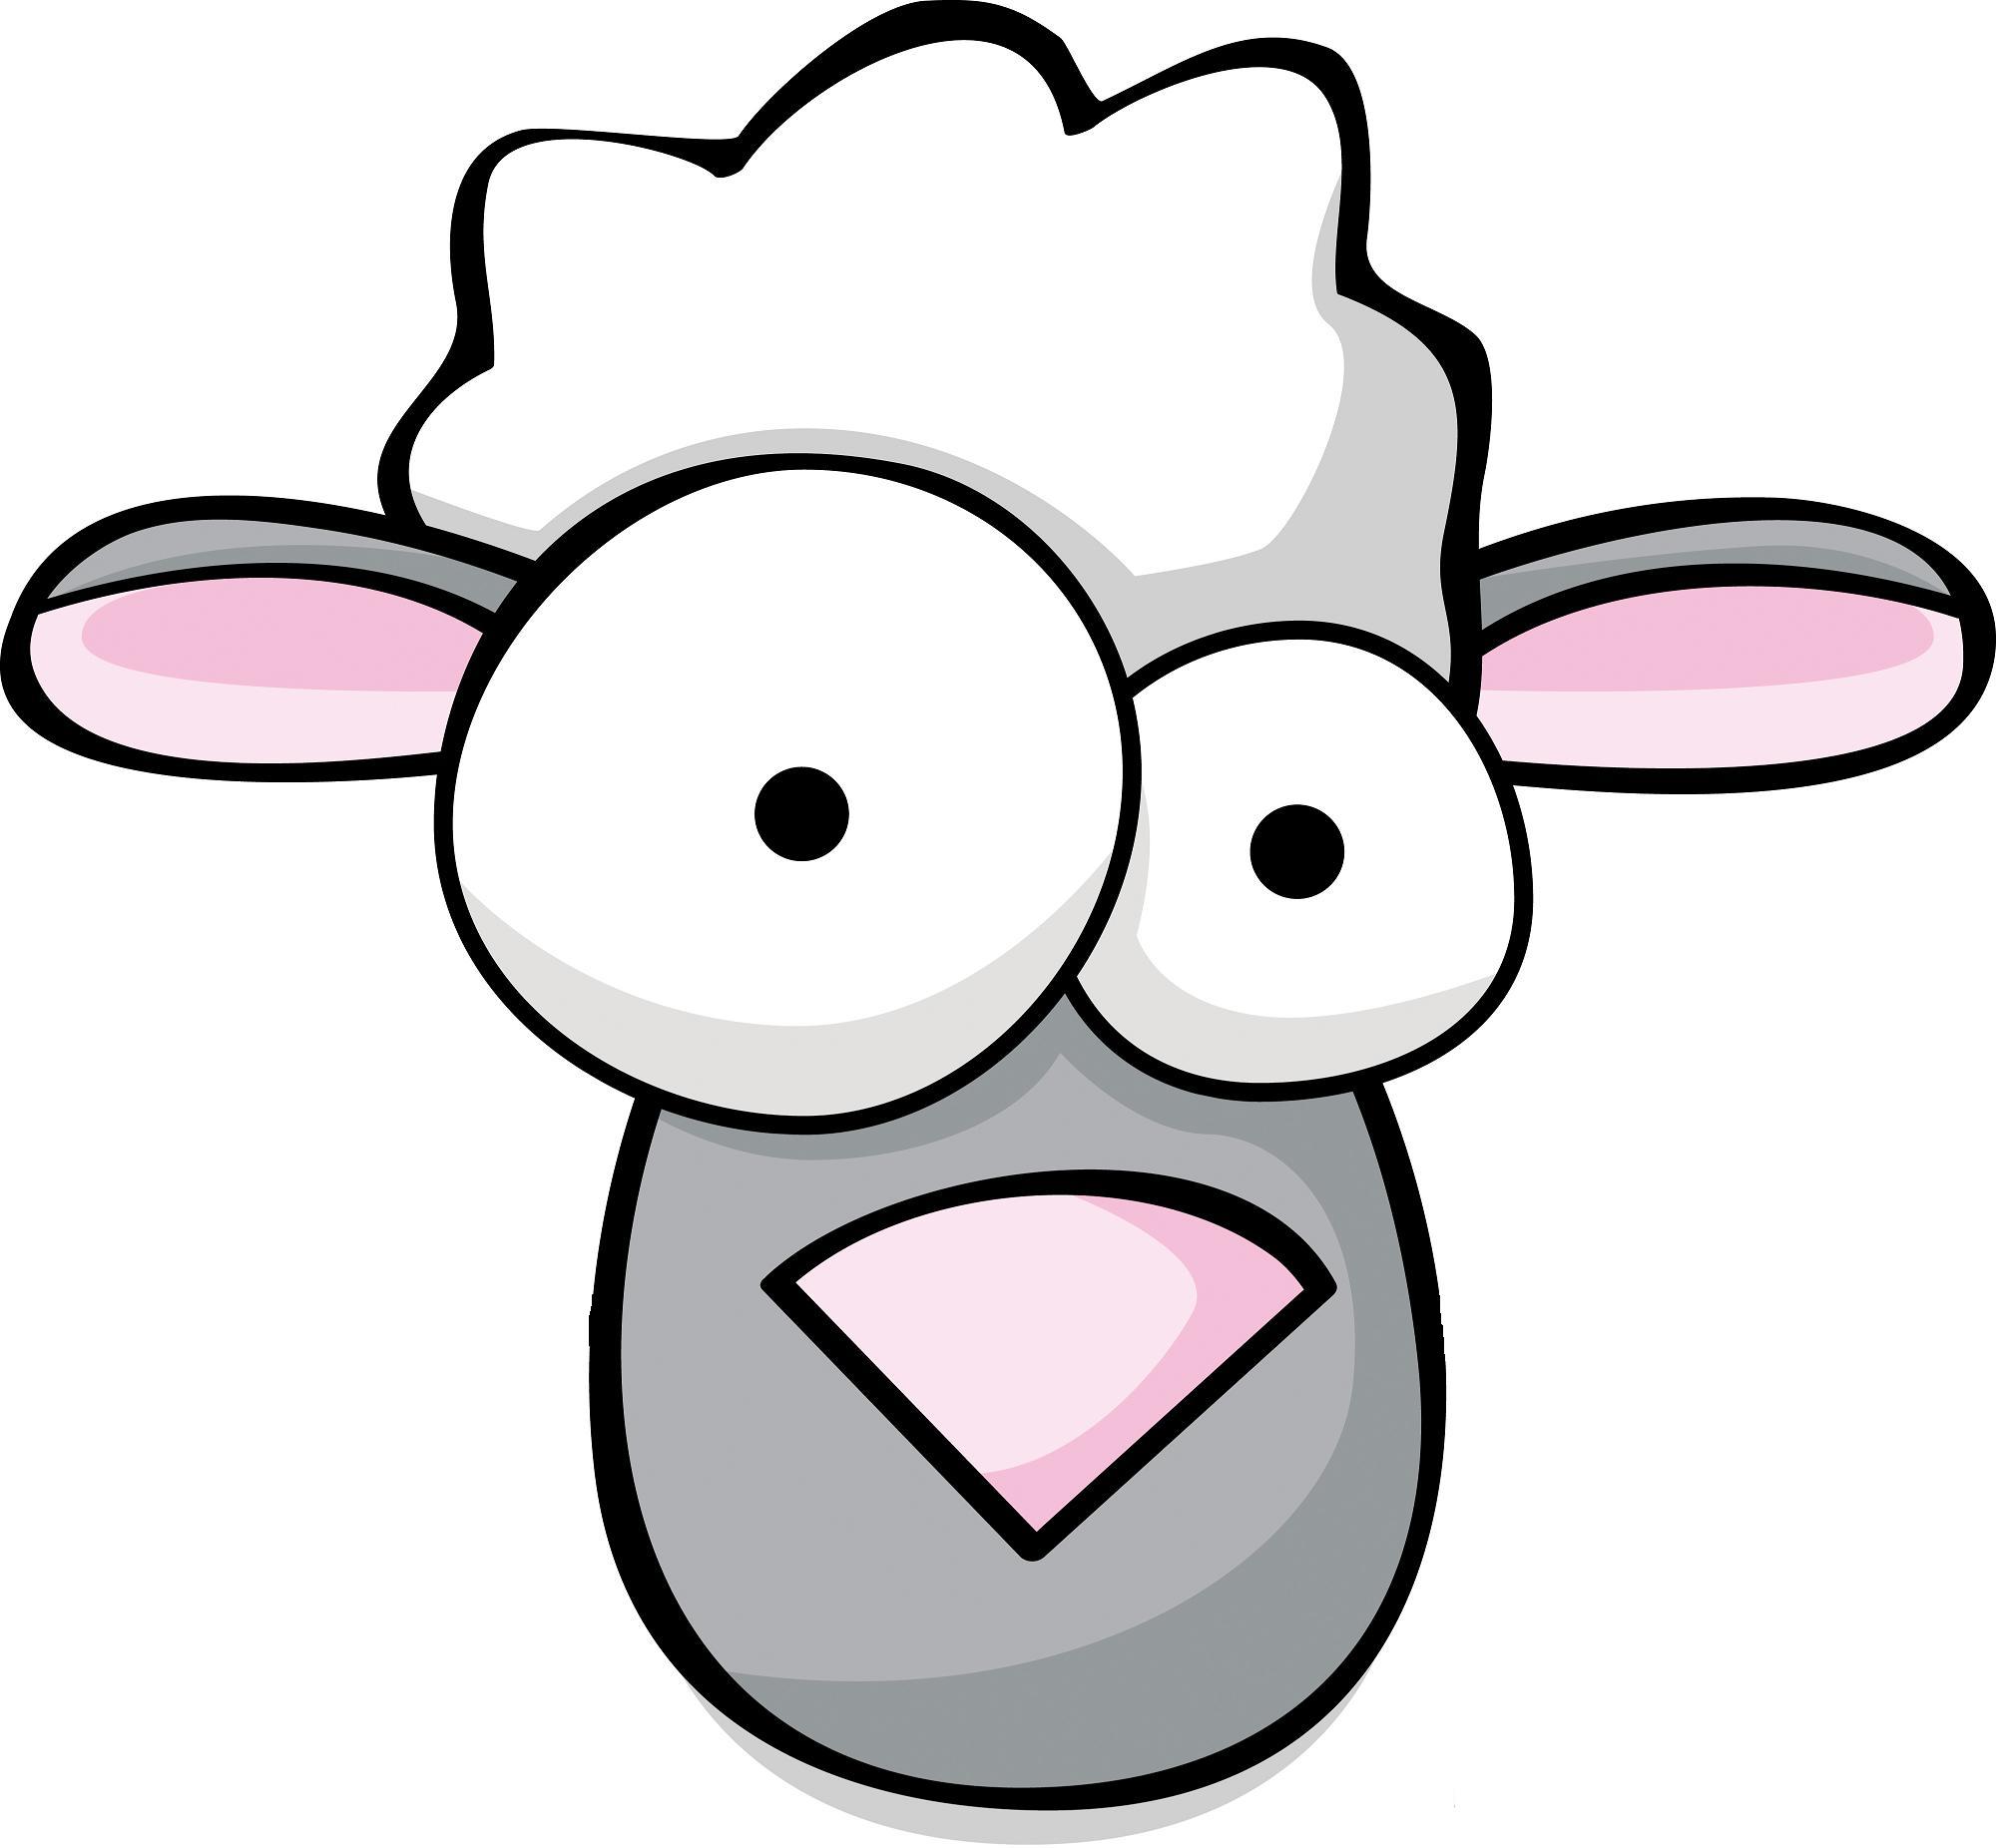 The Domain Sheep